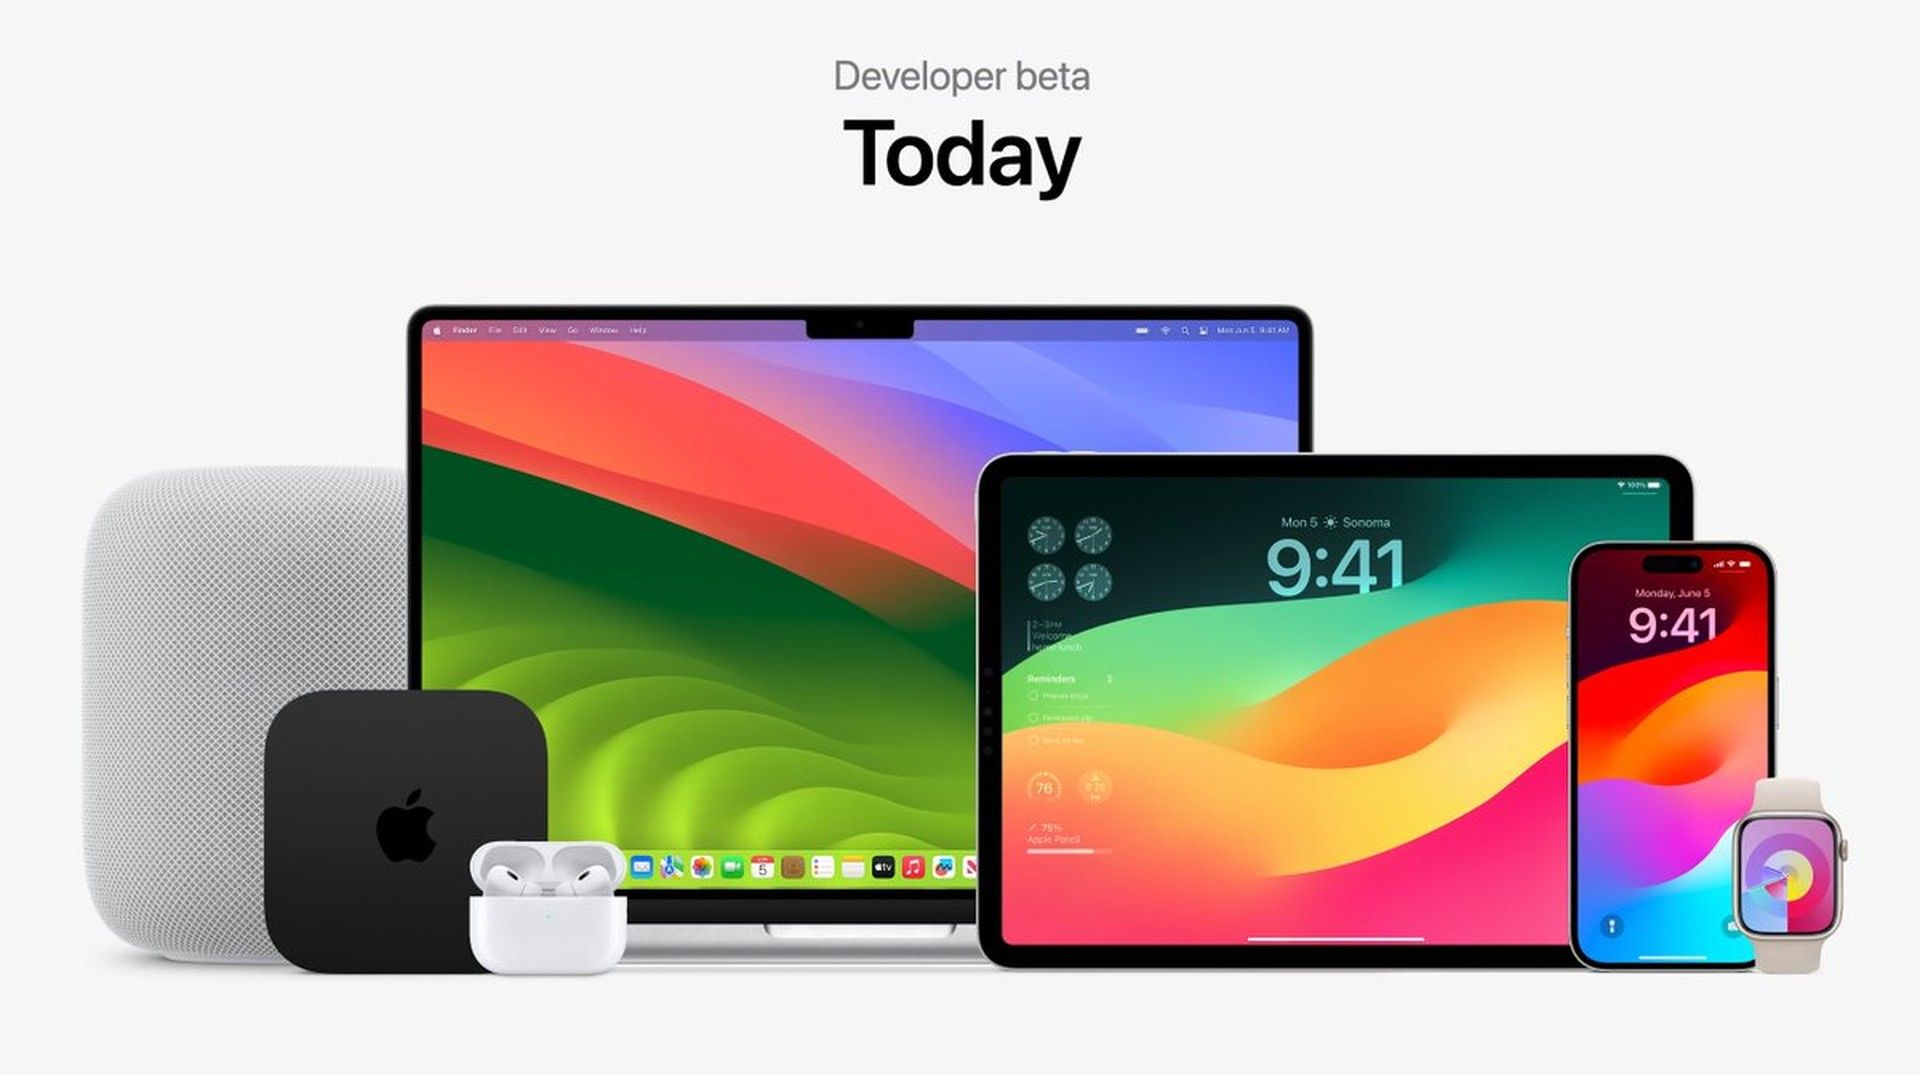 Apple macOS Sonoma beta